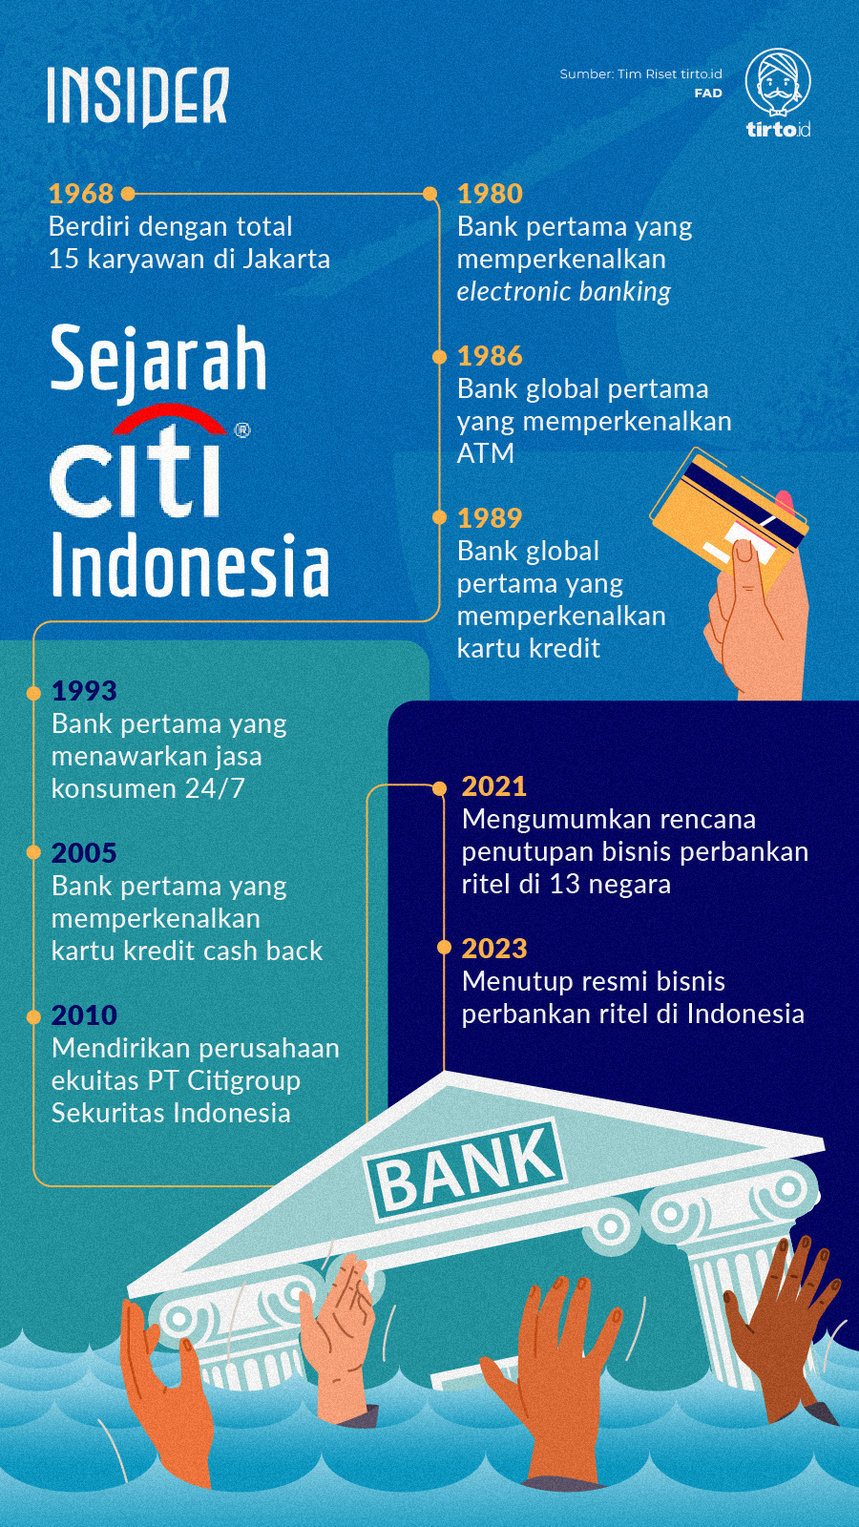 Infografik Insider Sejarah Citi Indonesia